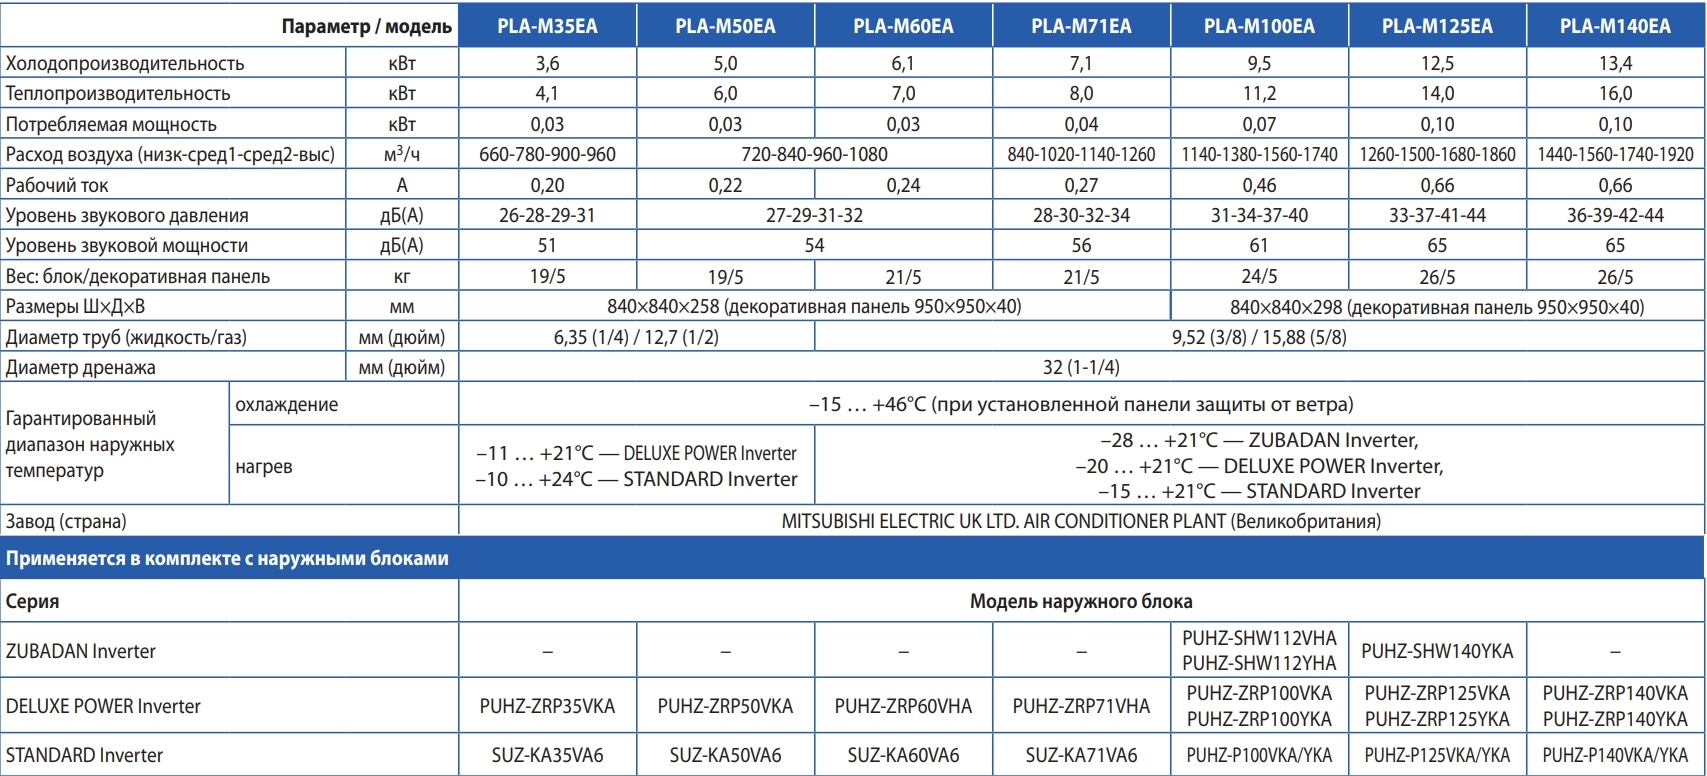 Mitsubishi Electric PLA-M71EA/SUZ-KA71VA Характеристики